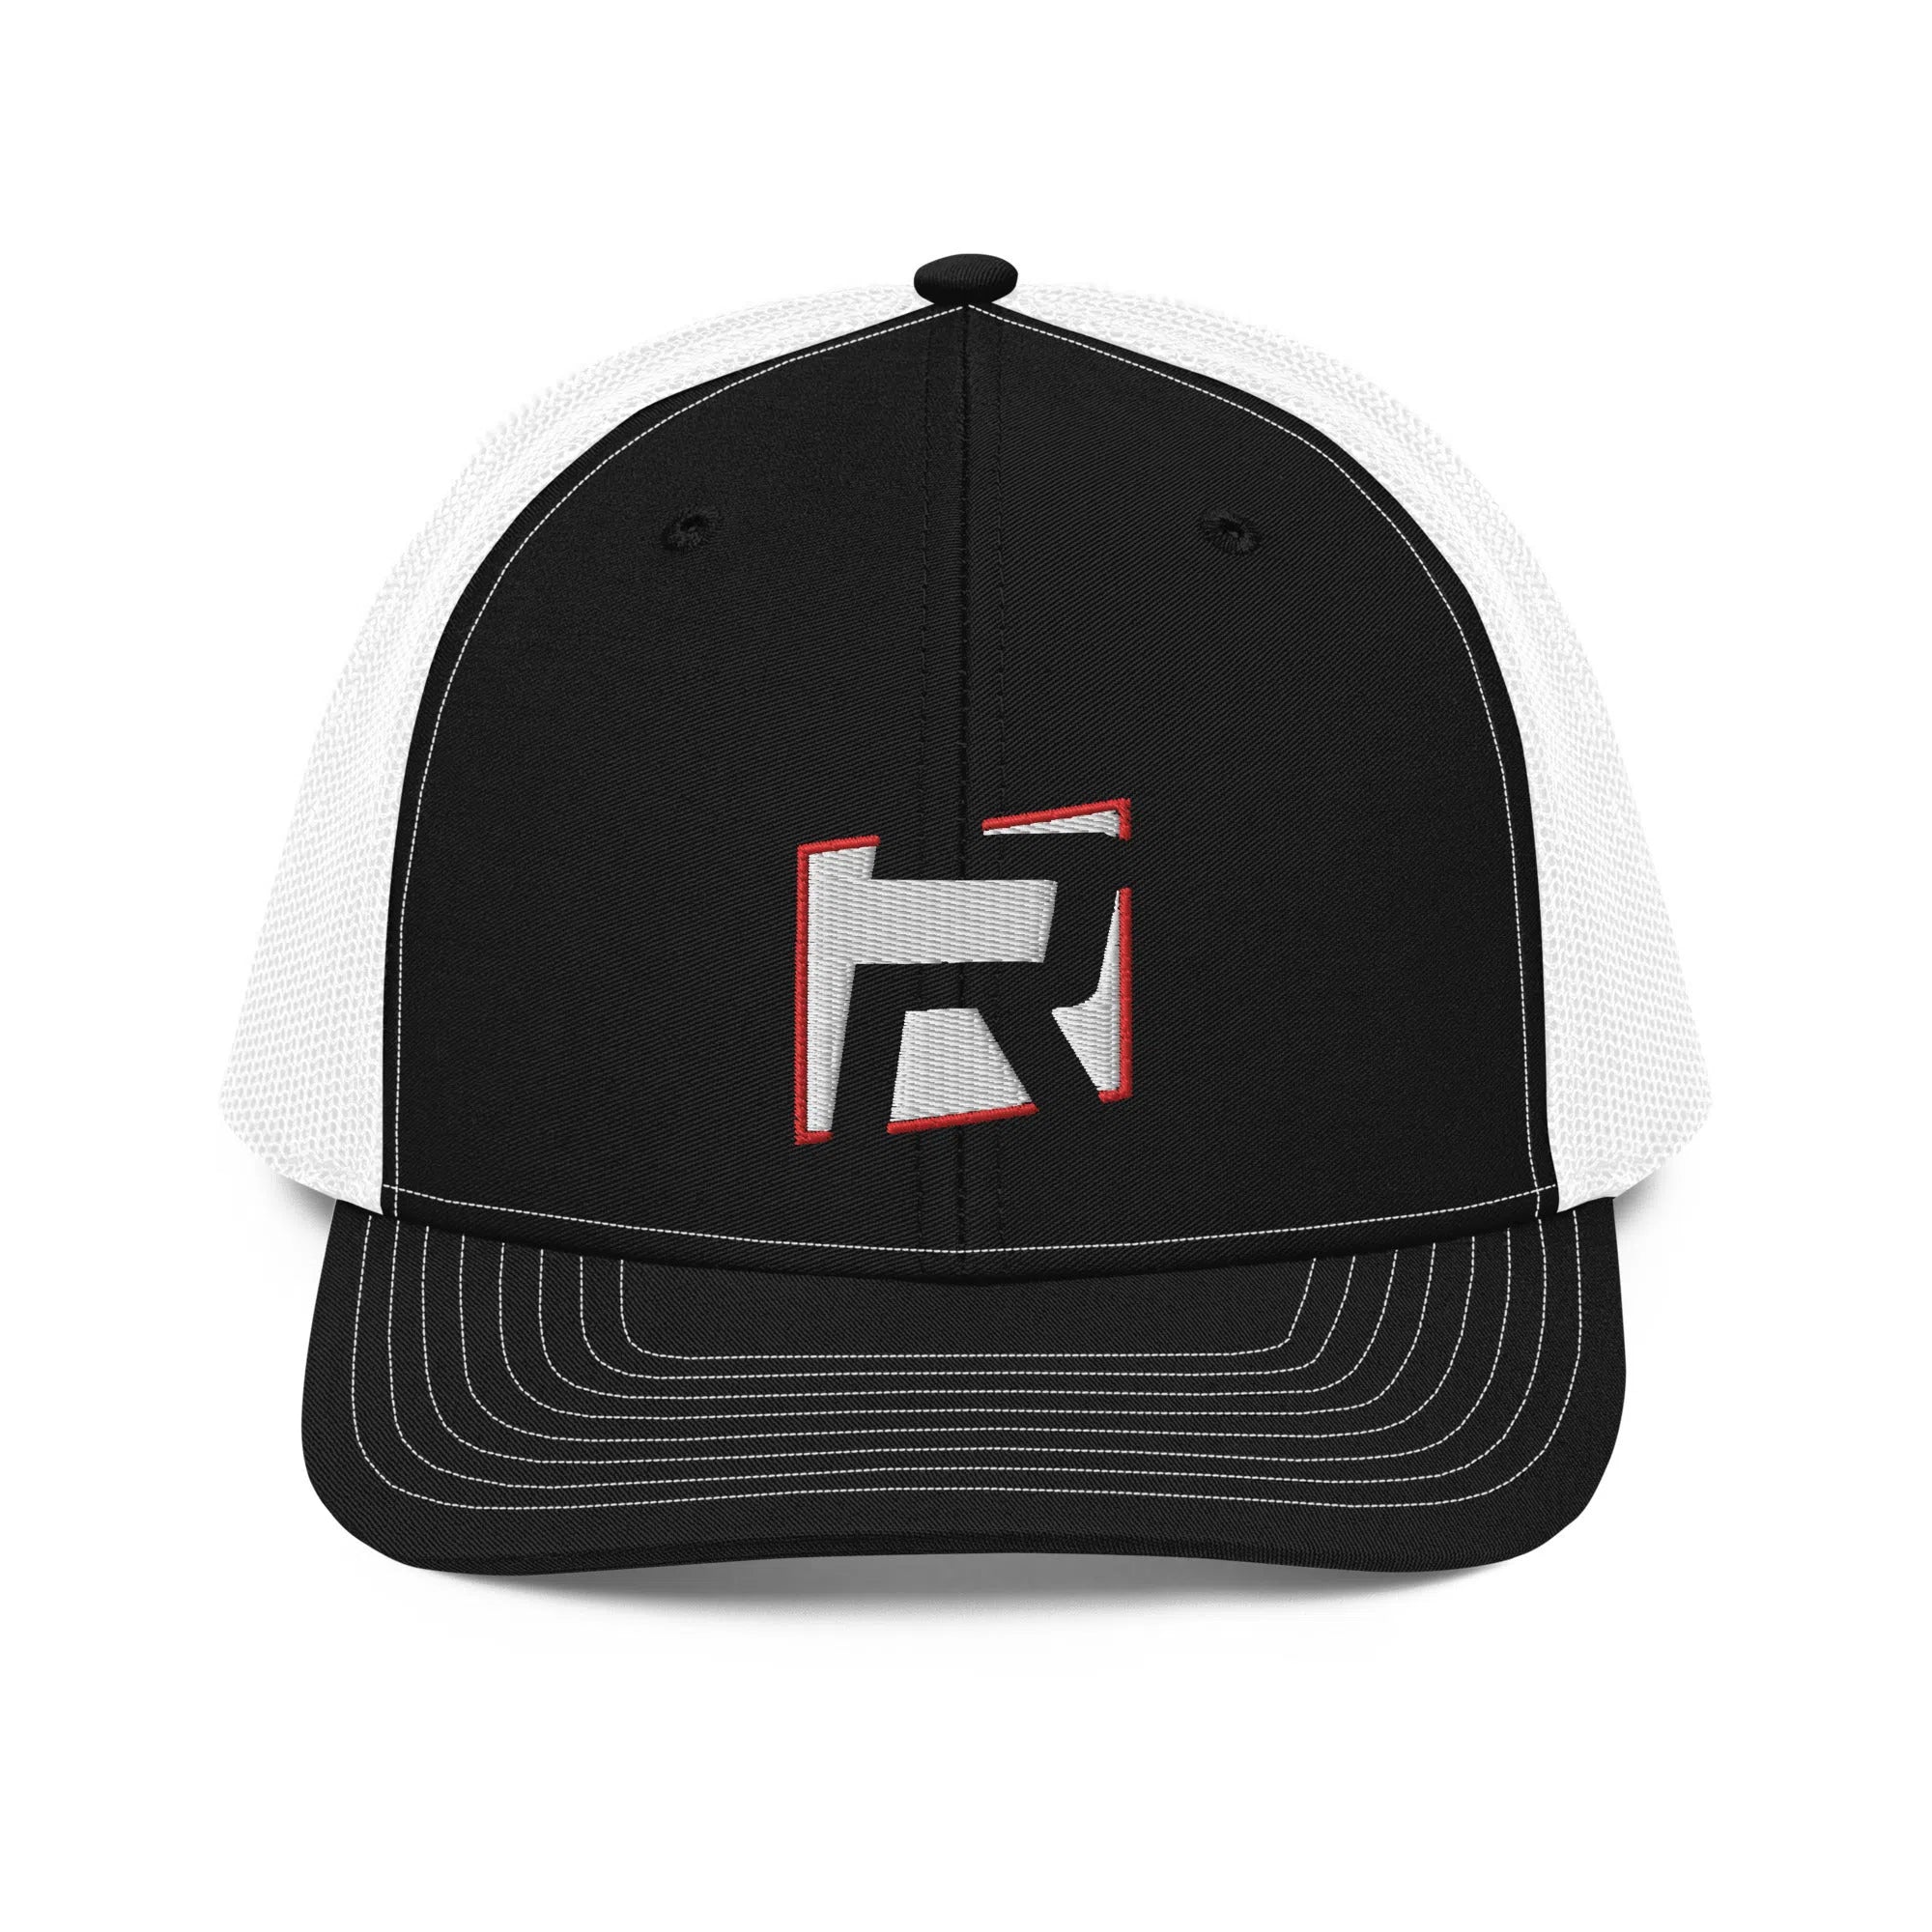 Redline x ULC Custom Embroidered Hat